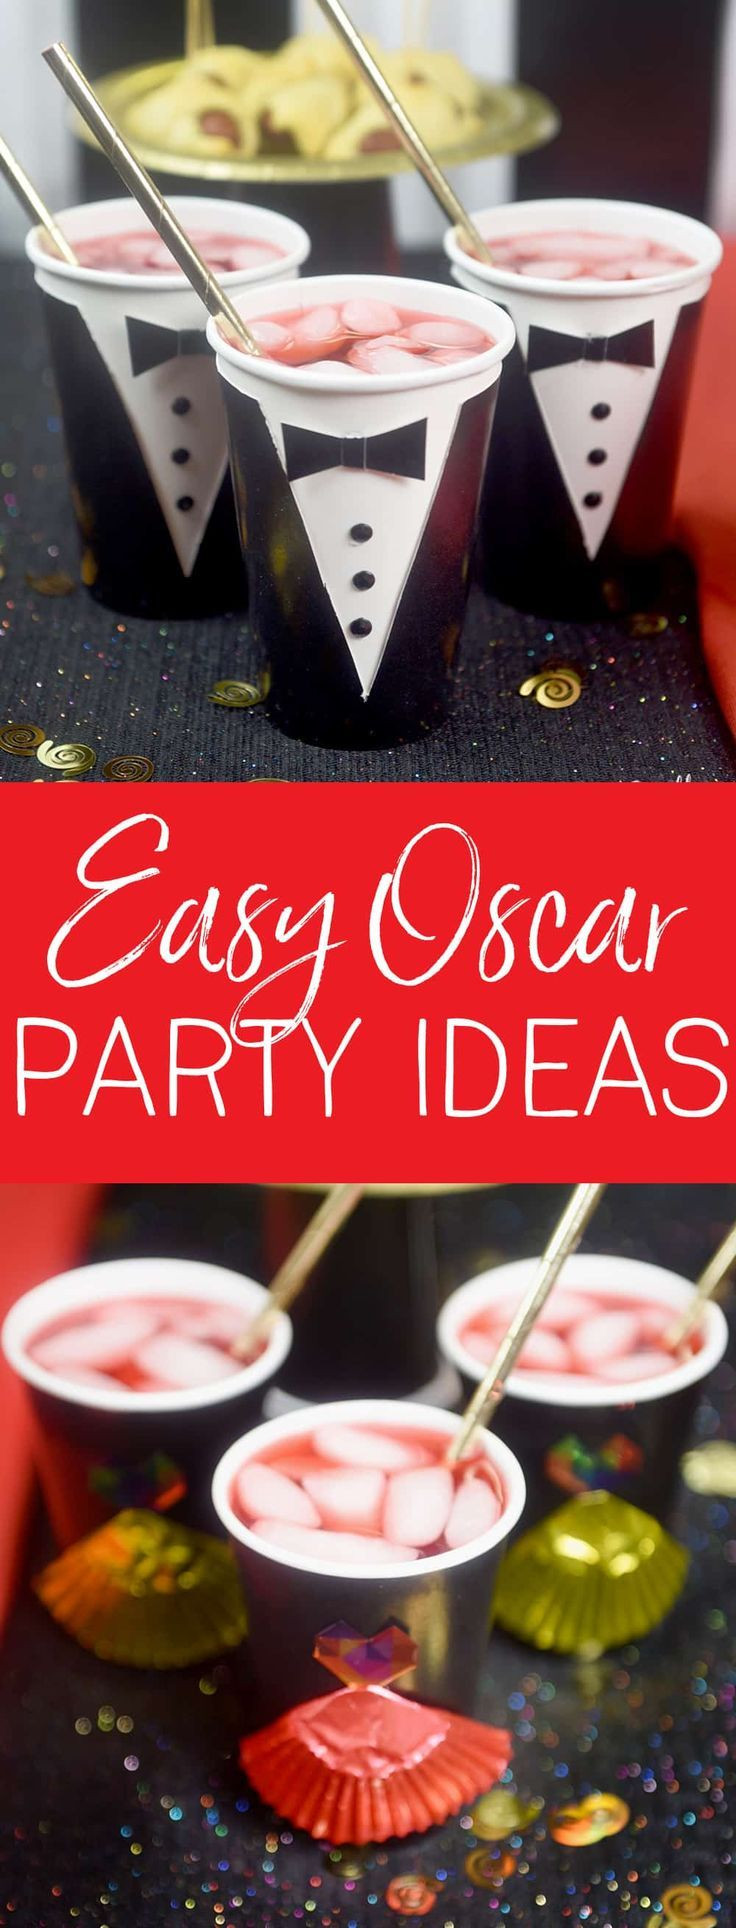 DIY Hollywood Party Decorations
 5 Easy Oscar Party Ideas